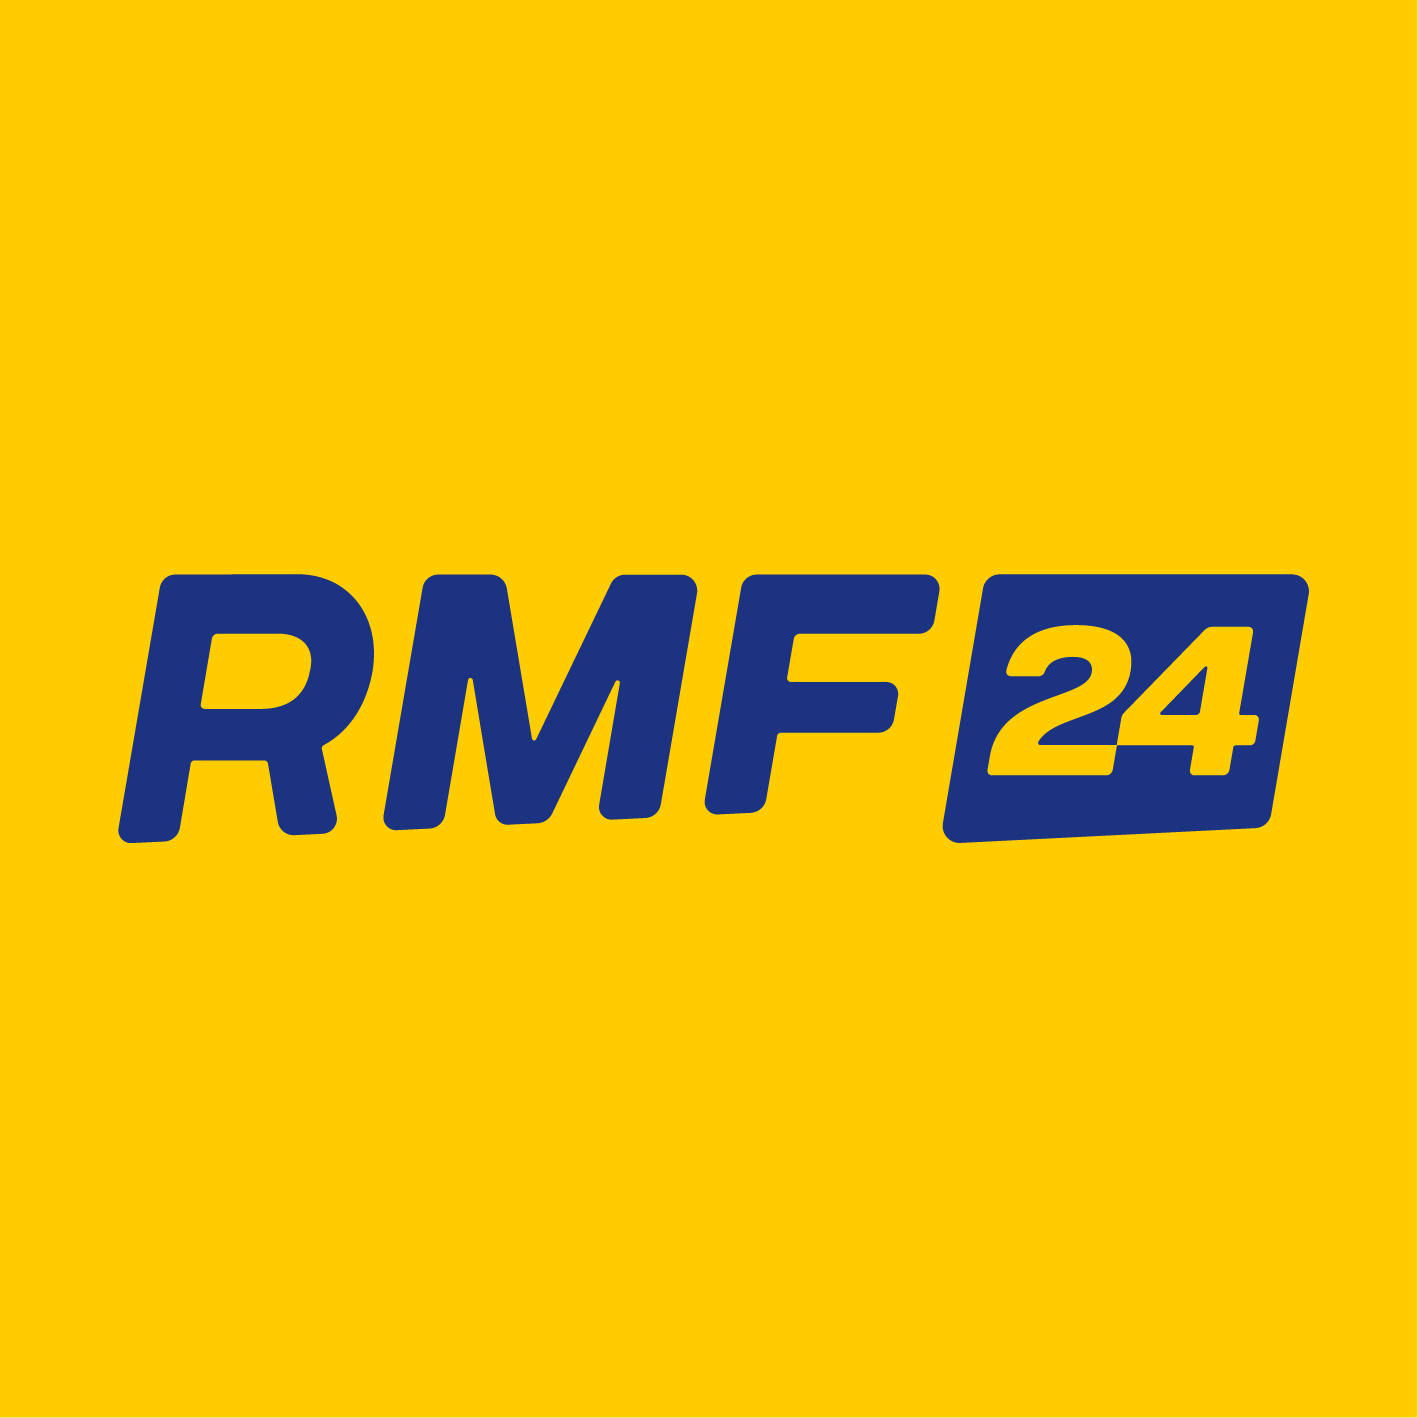 RMF24